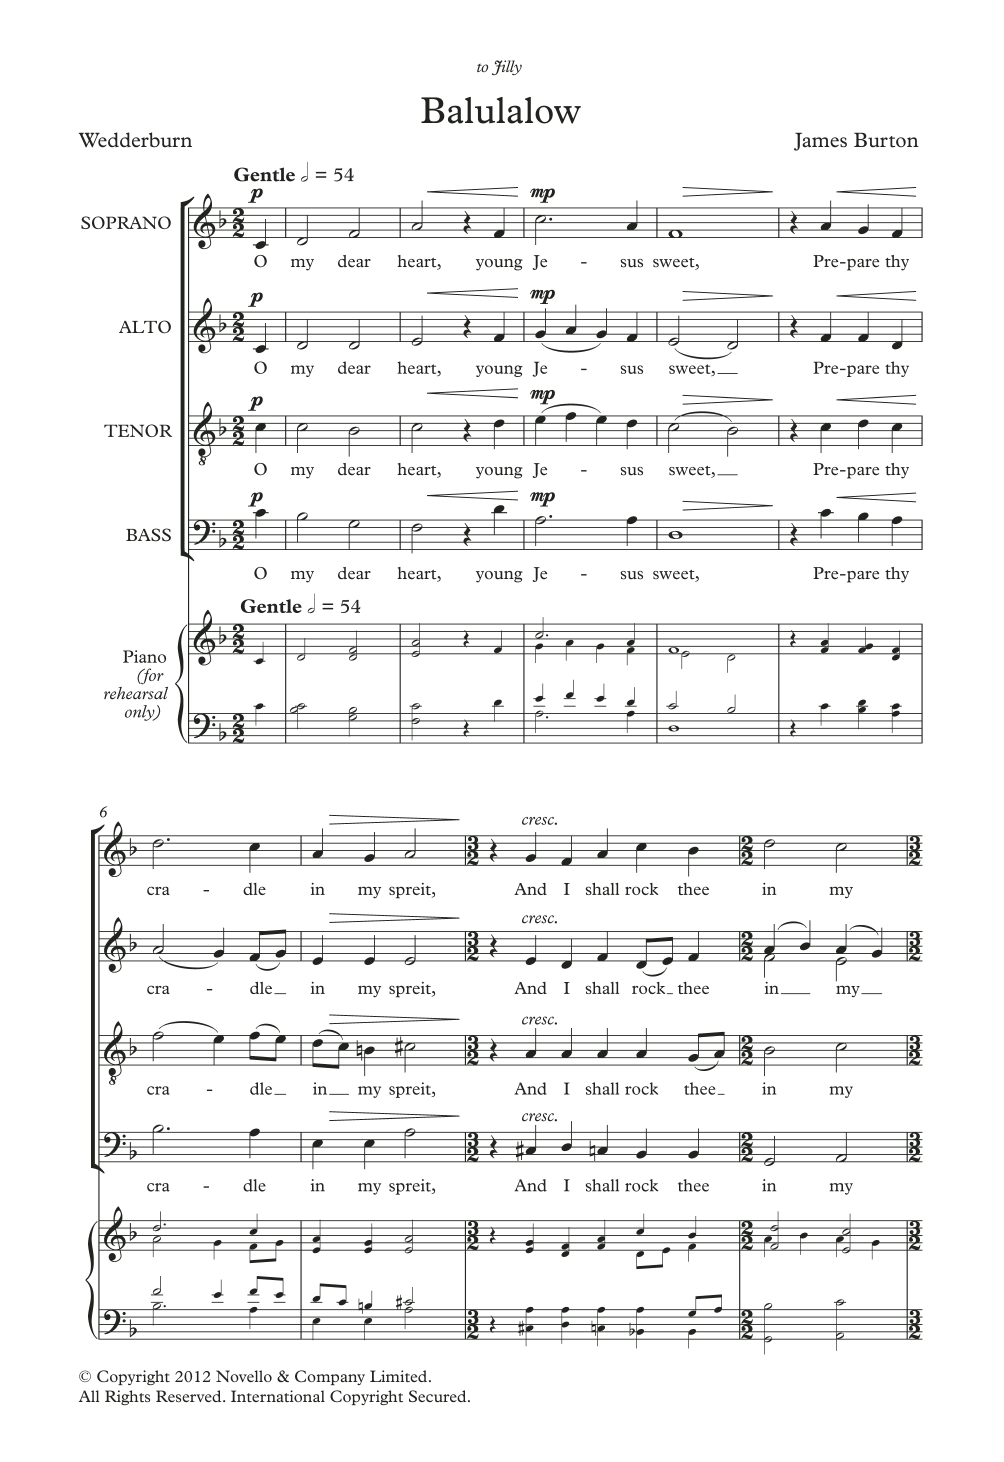 James Burton Balulalow Sheet Music Notes & Chords for SATB Choir - Download or Print PDF